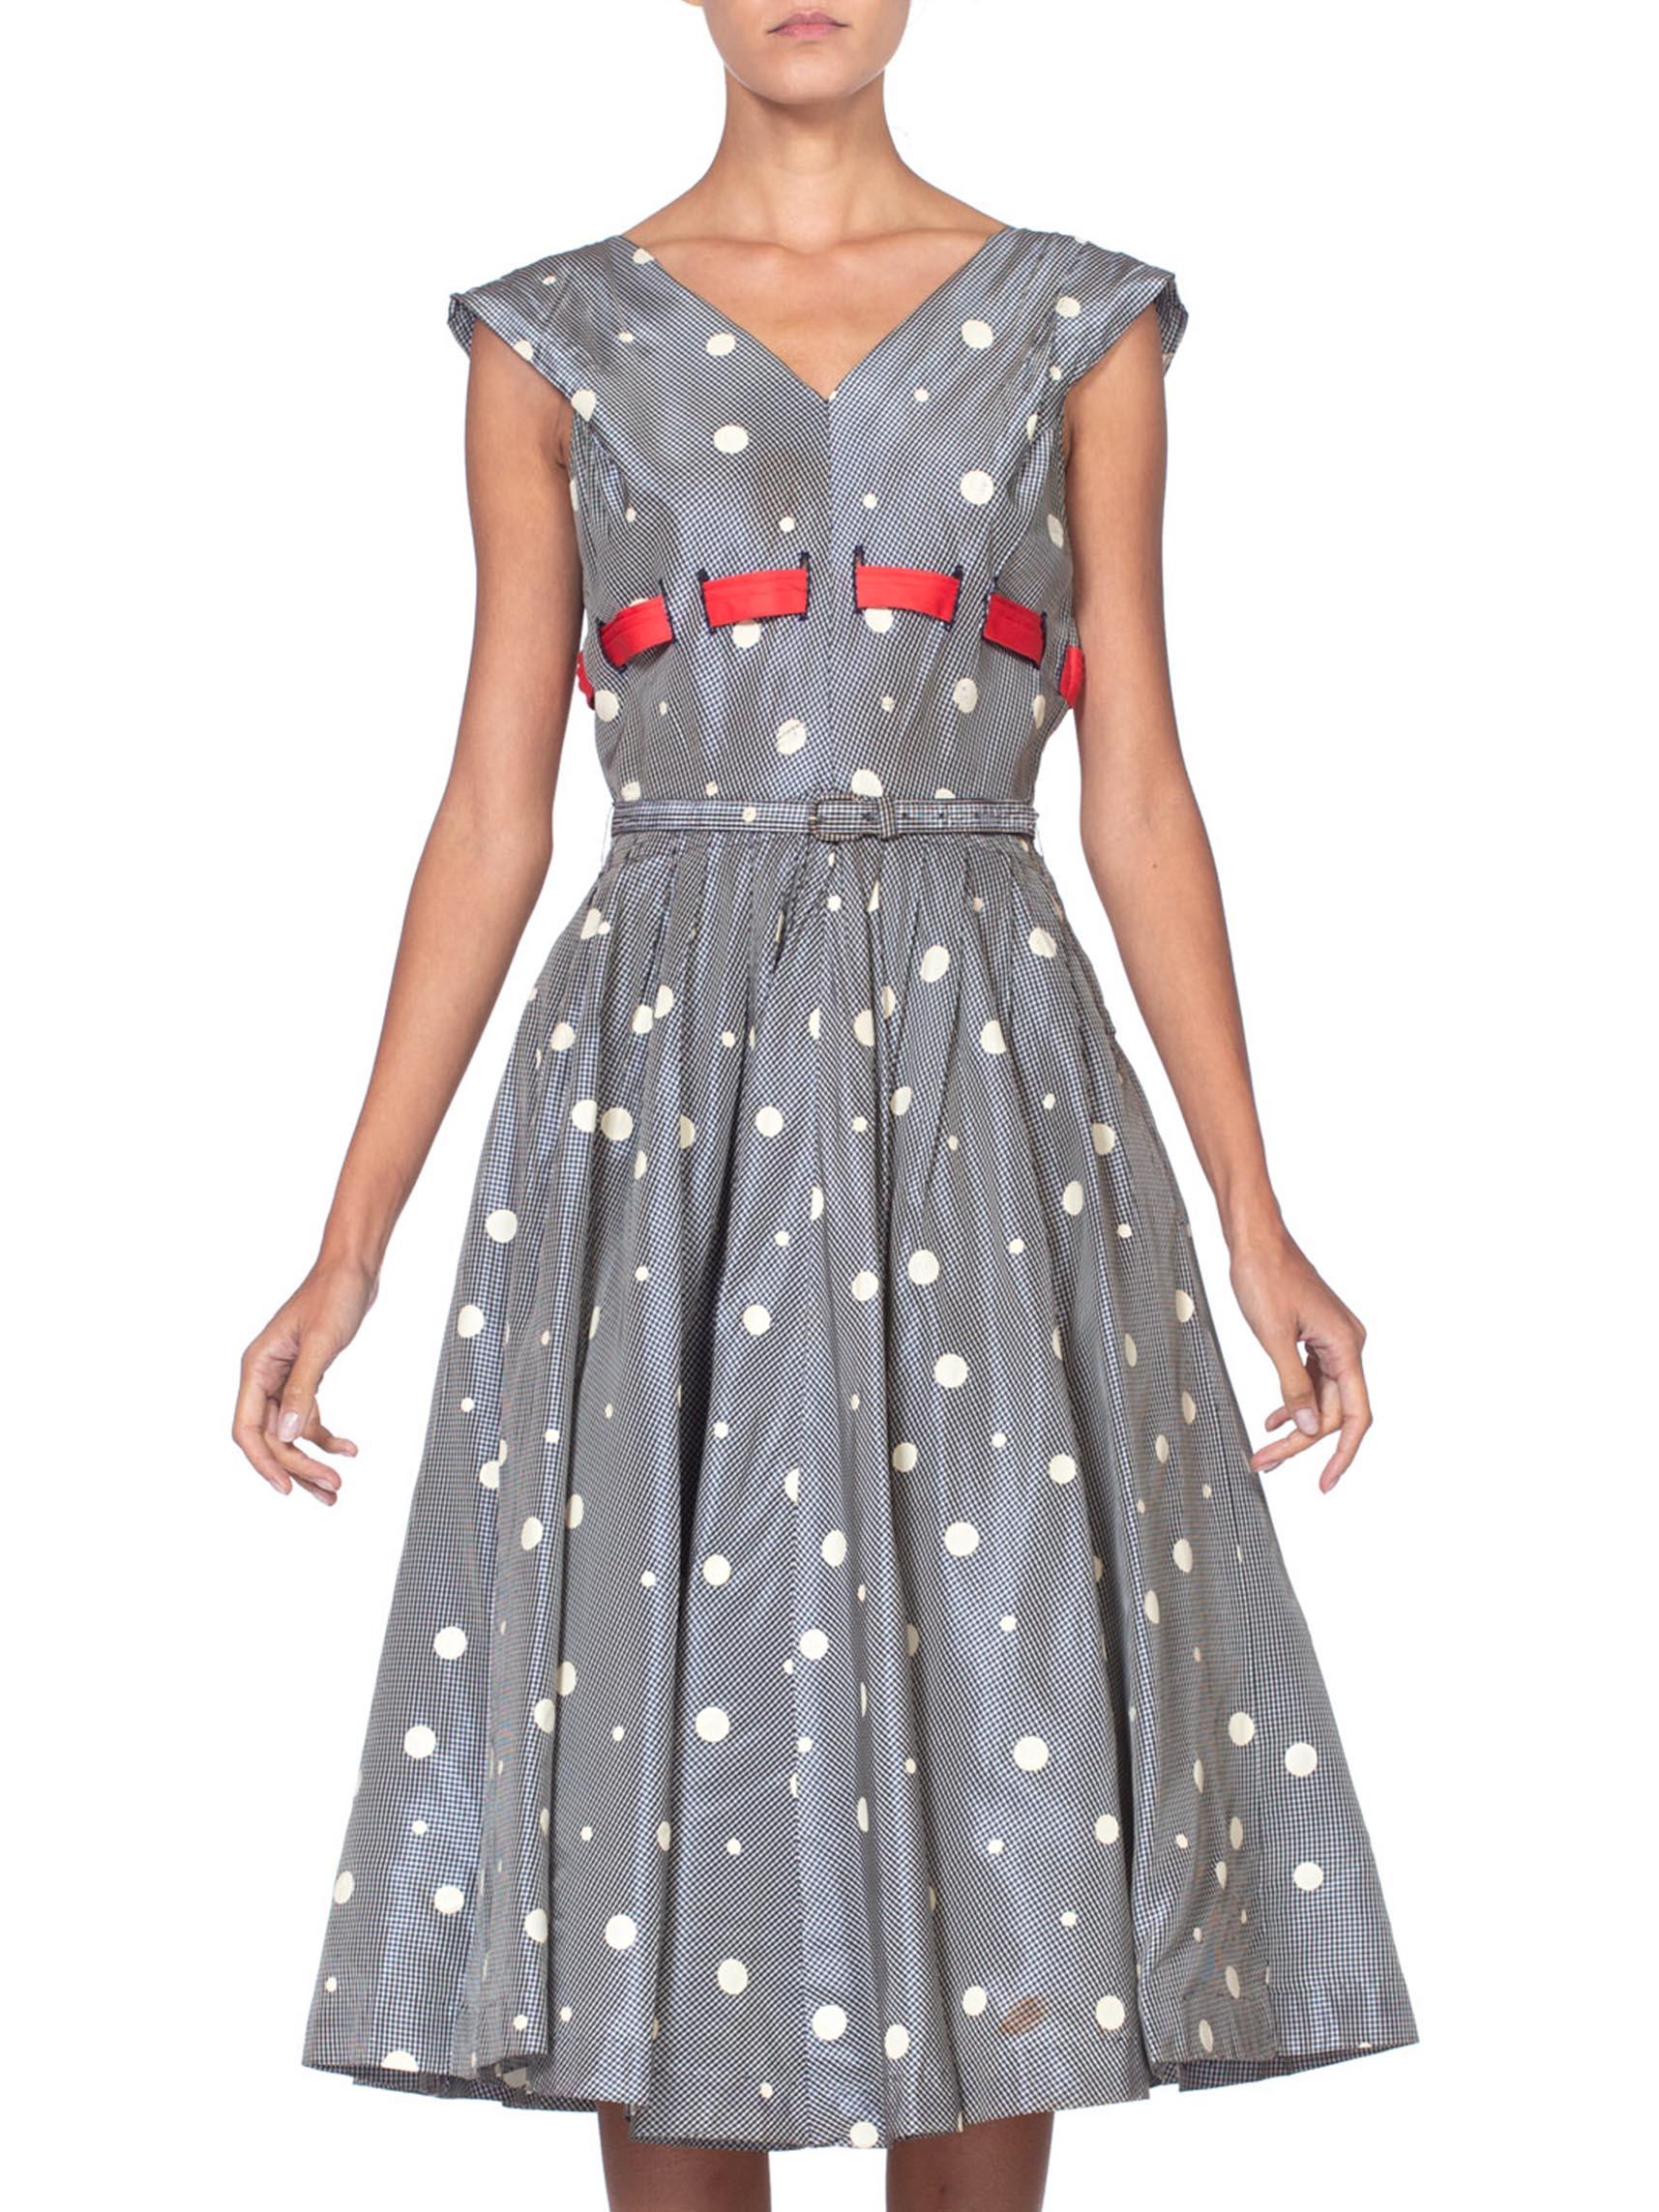 1950 polka dot dress